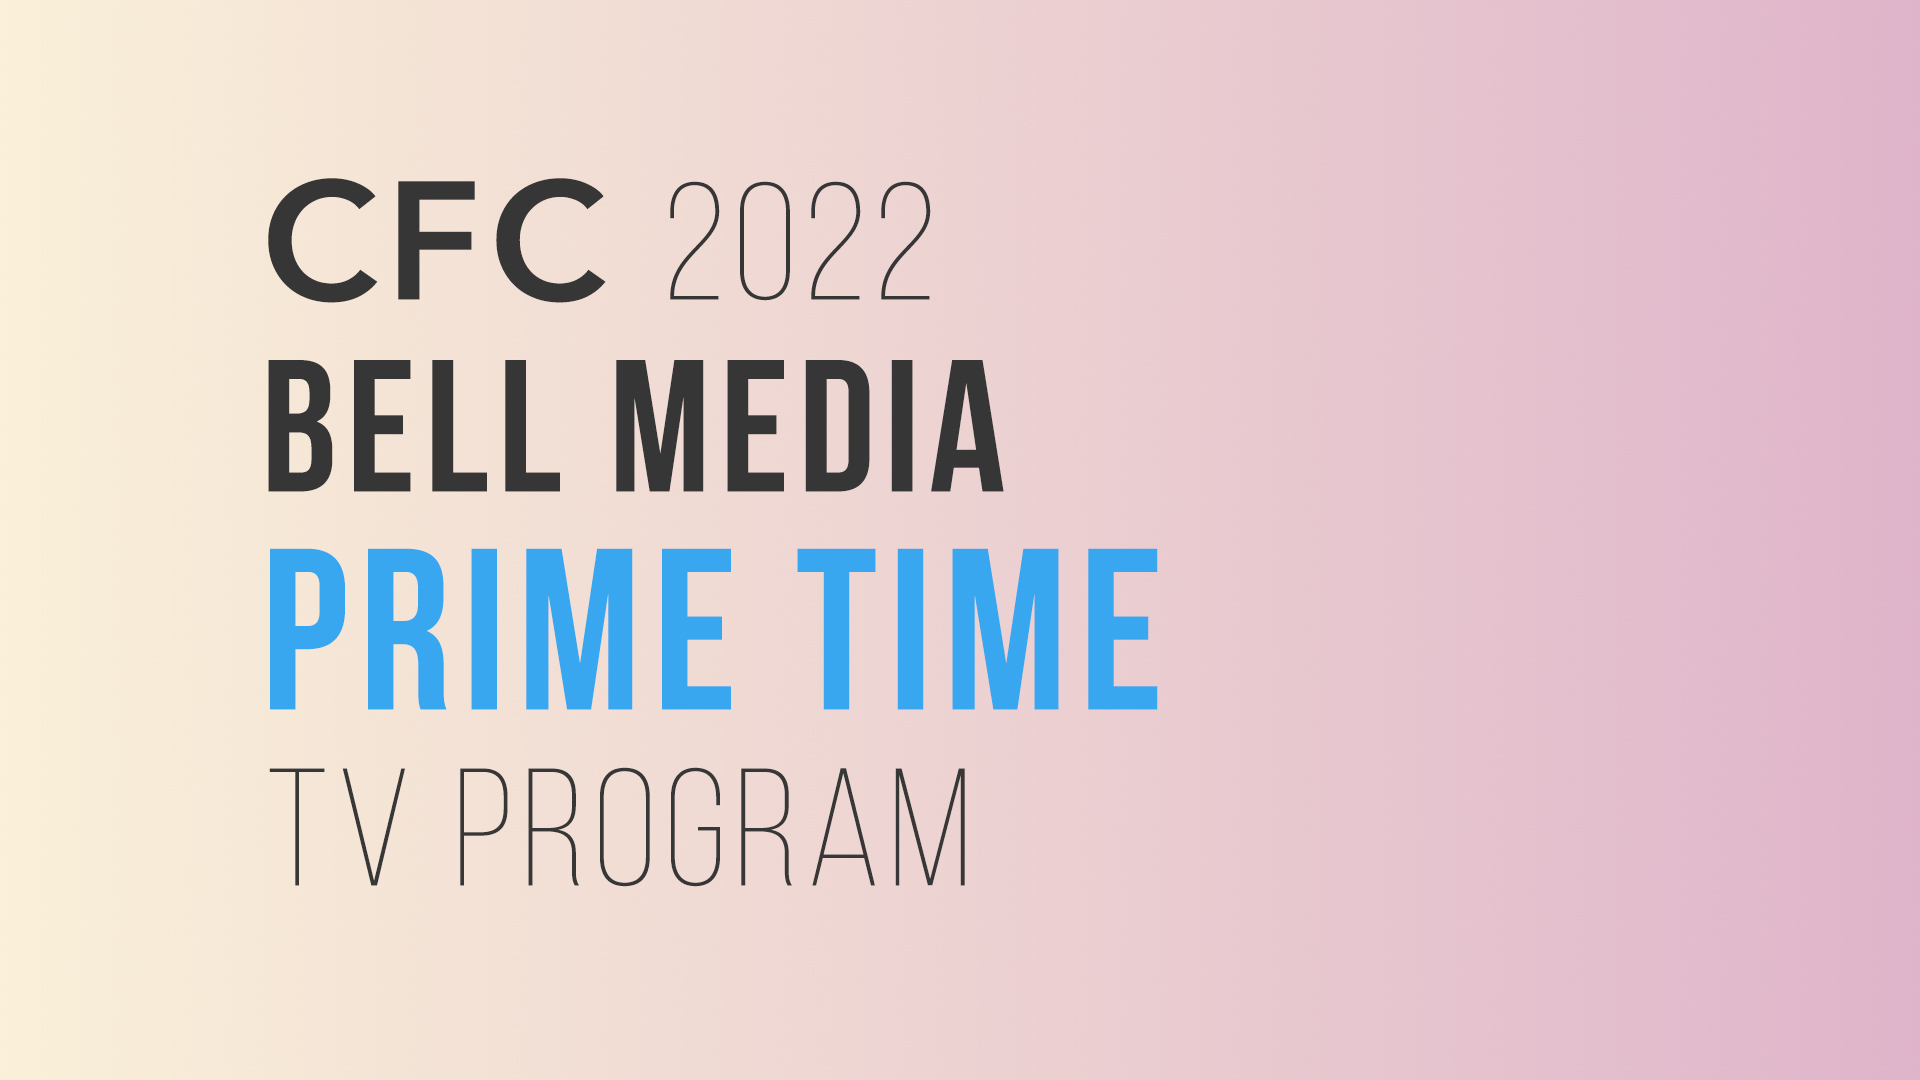 Canadian Film Centre, CFC, Bell Media Prime Time TV Program, 2022, Resident, Helmann Wilhelm, screenwriter, Canada